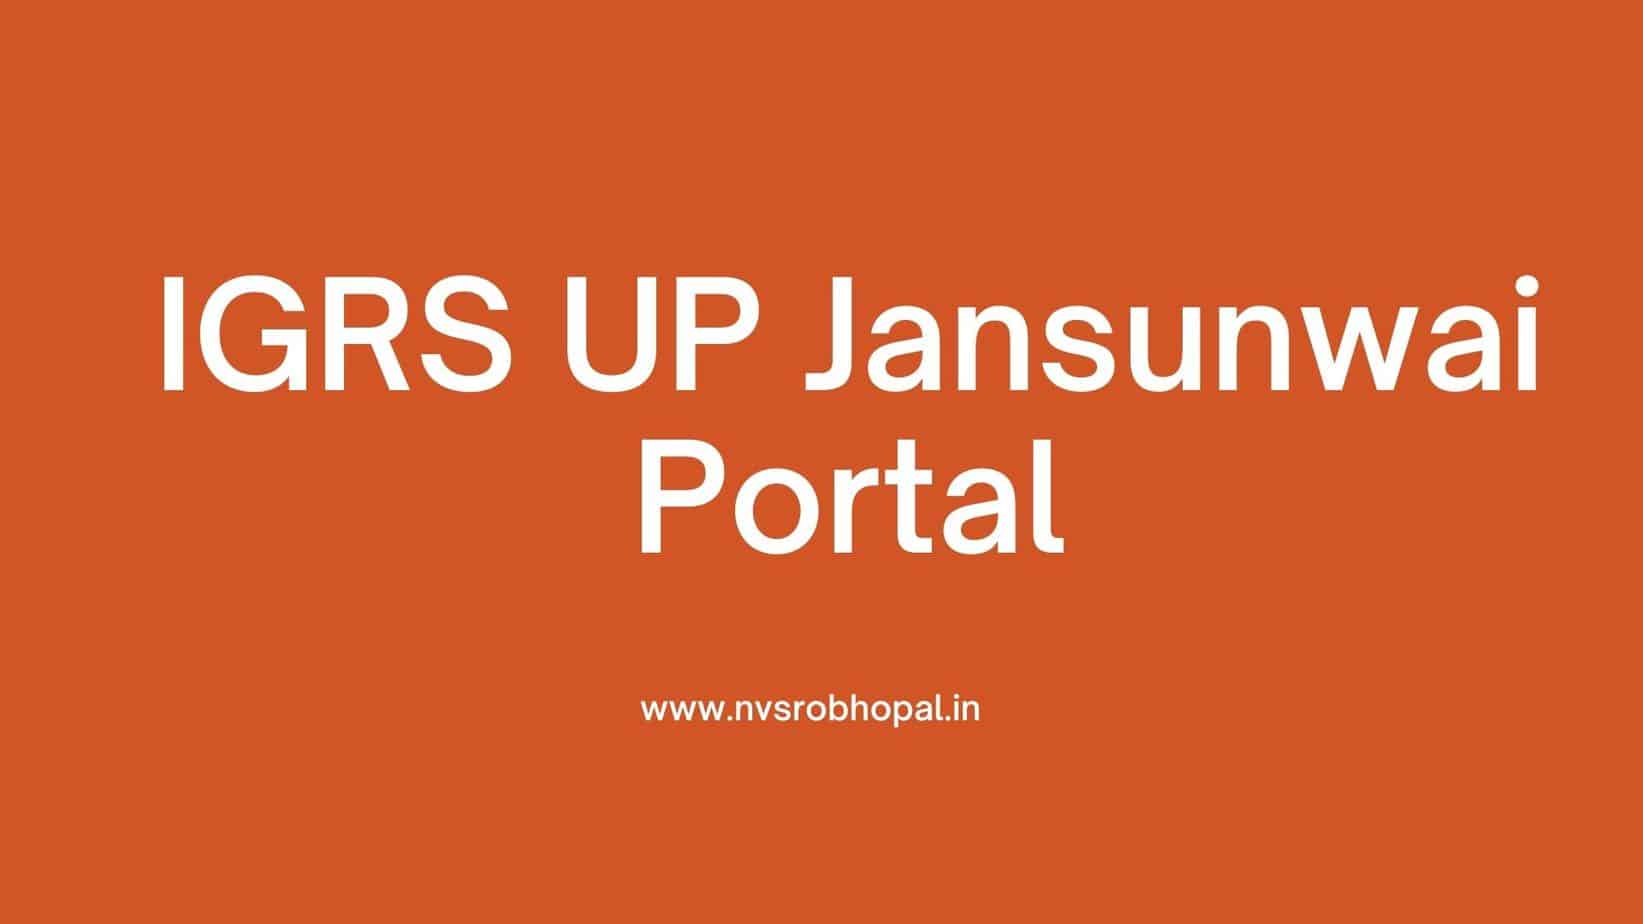 IGRS UP Jansunwai Portal